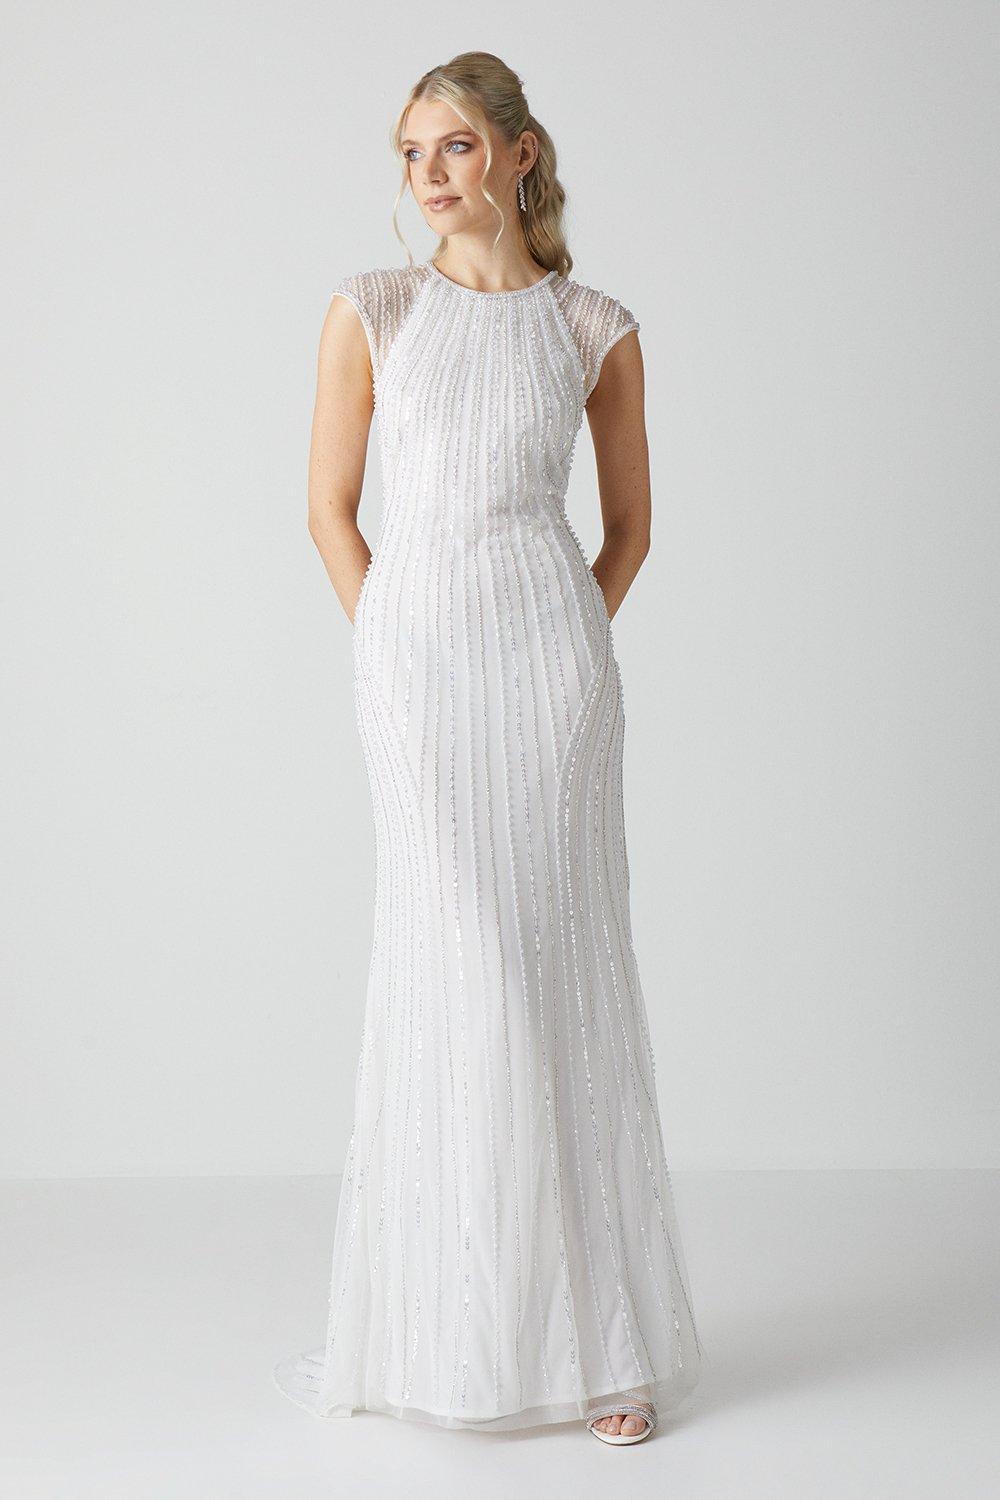 Embellished Cap Sleeve Linear Embellished Wedding Dress - Ivory